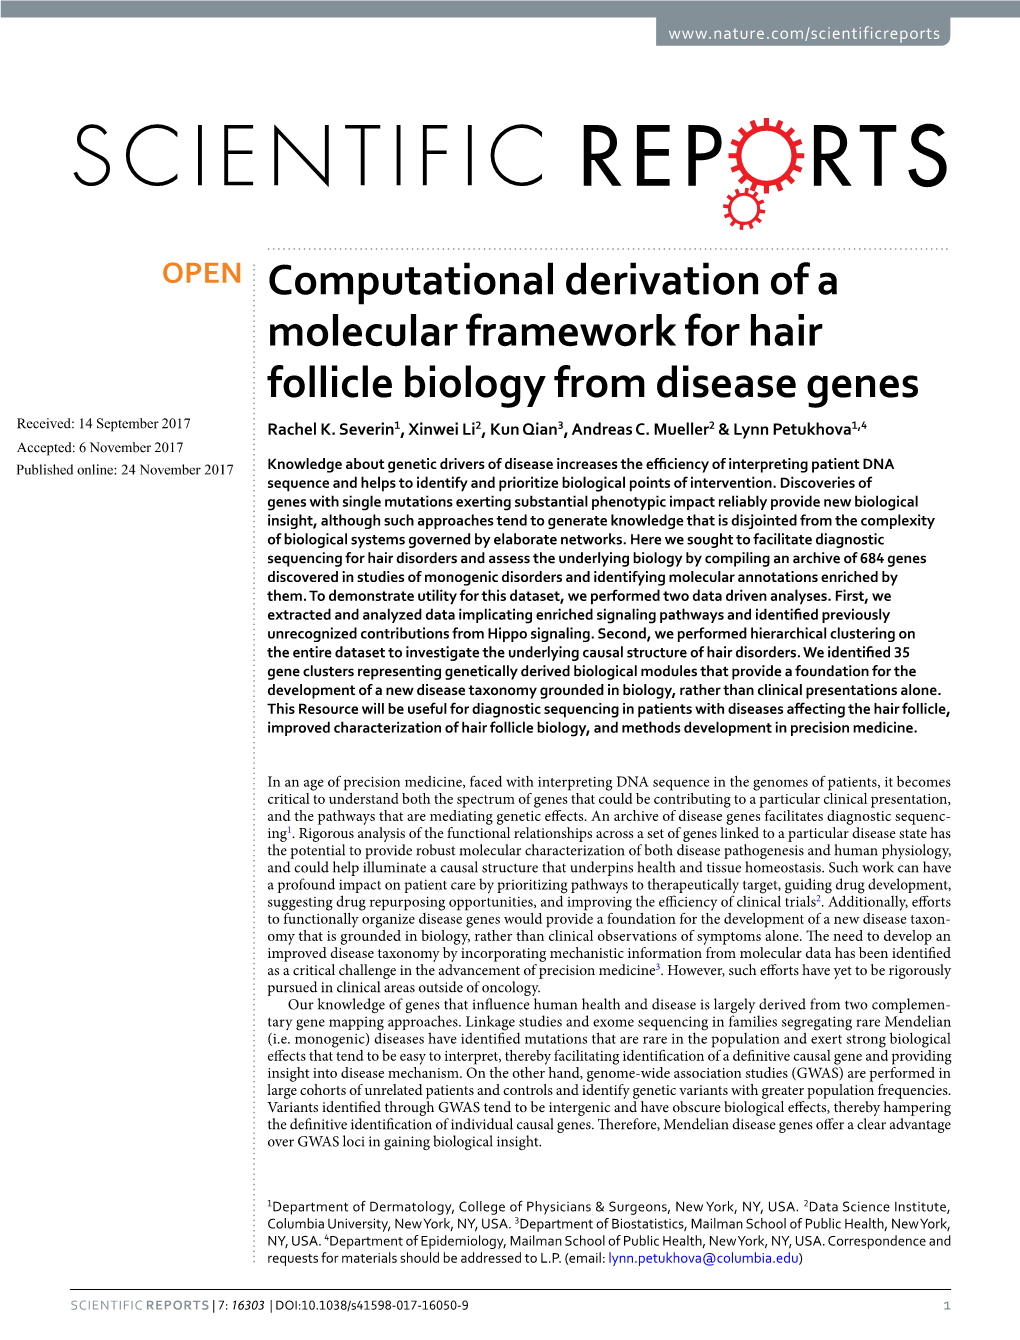 Computational Derivation of a Molecular Framework for Hair Follicle Biology from Disease Genes Received: 14 September 2017 Rachel K